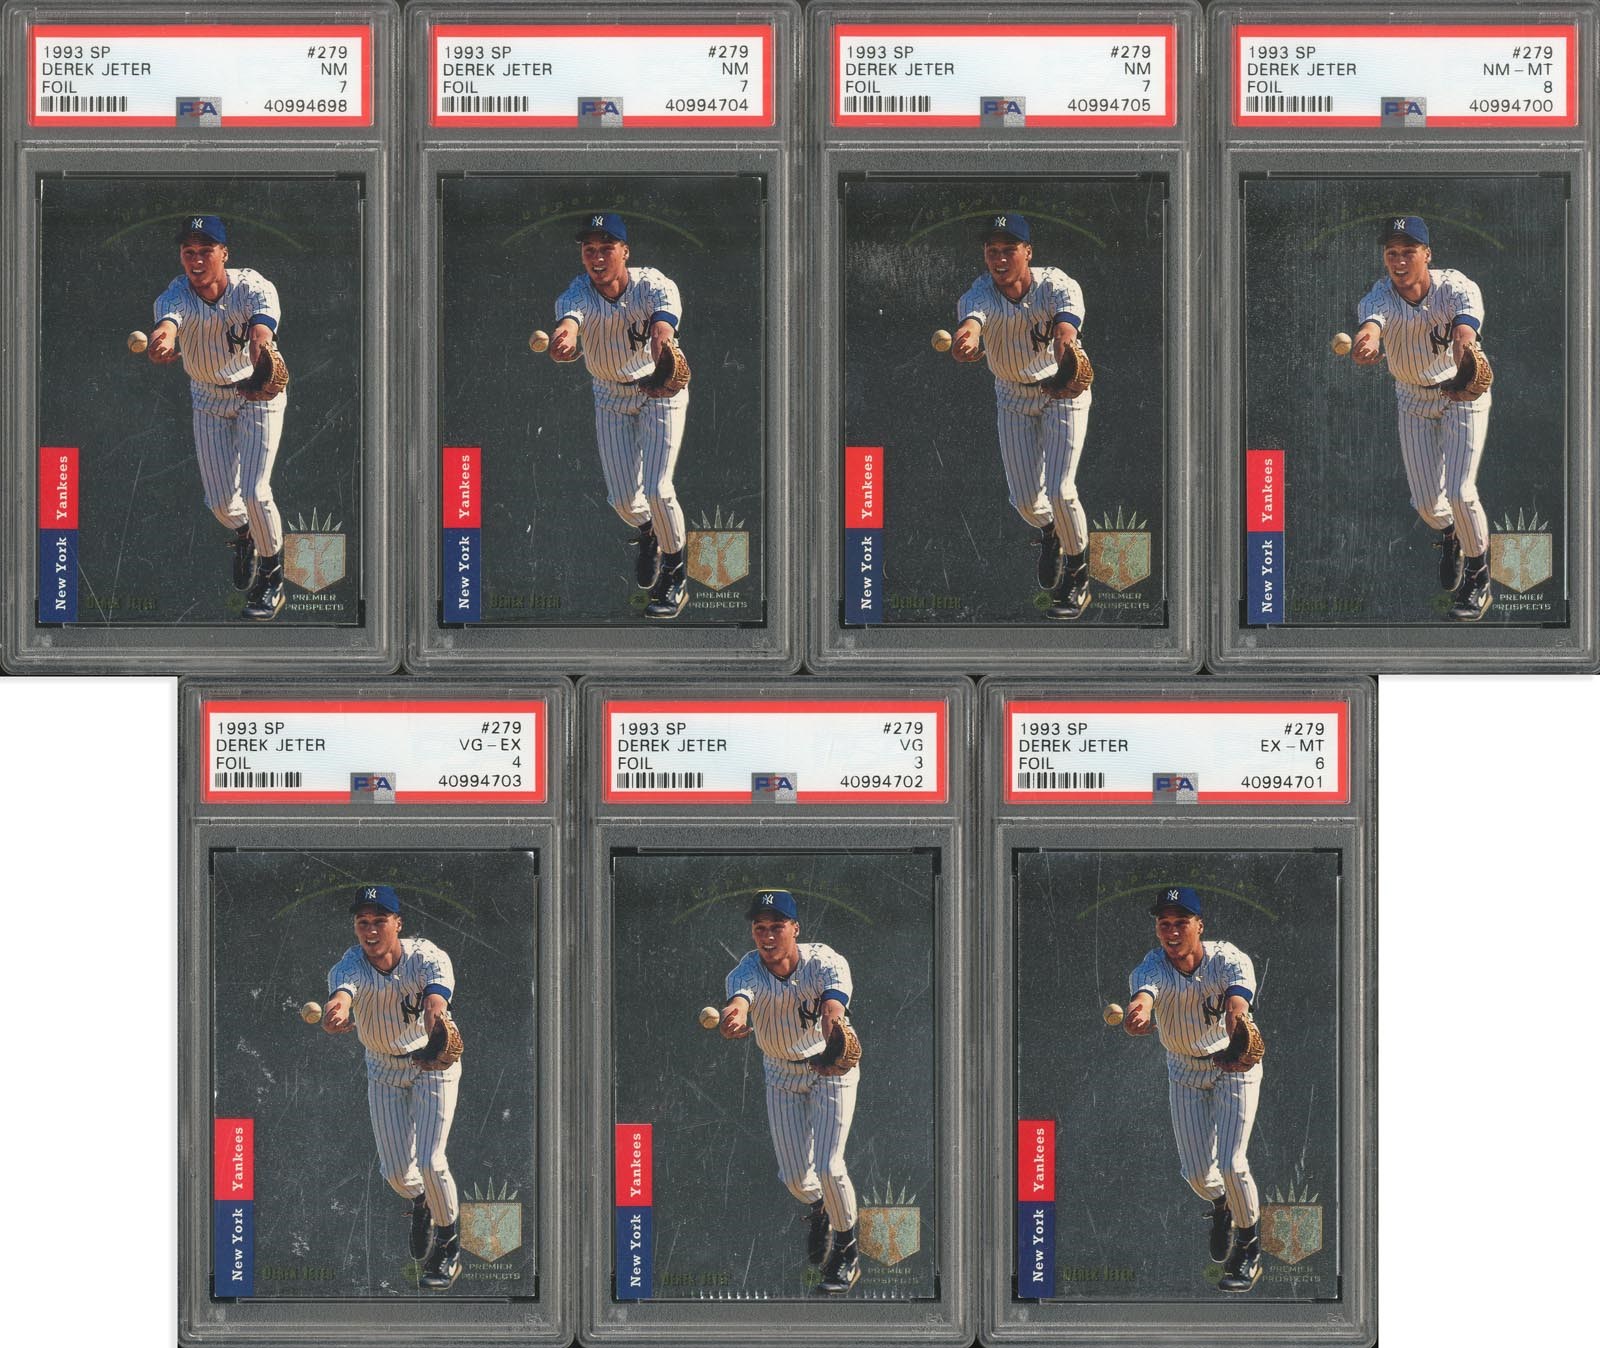 Baseball and Trading Cards - (7) 1993 SP Foil Derek Jeter #279 PSA Graded Rookies